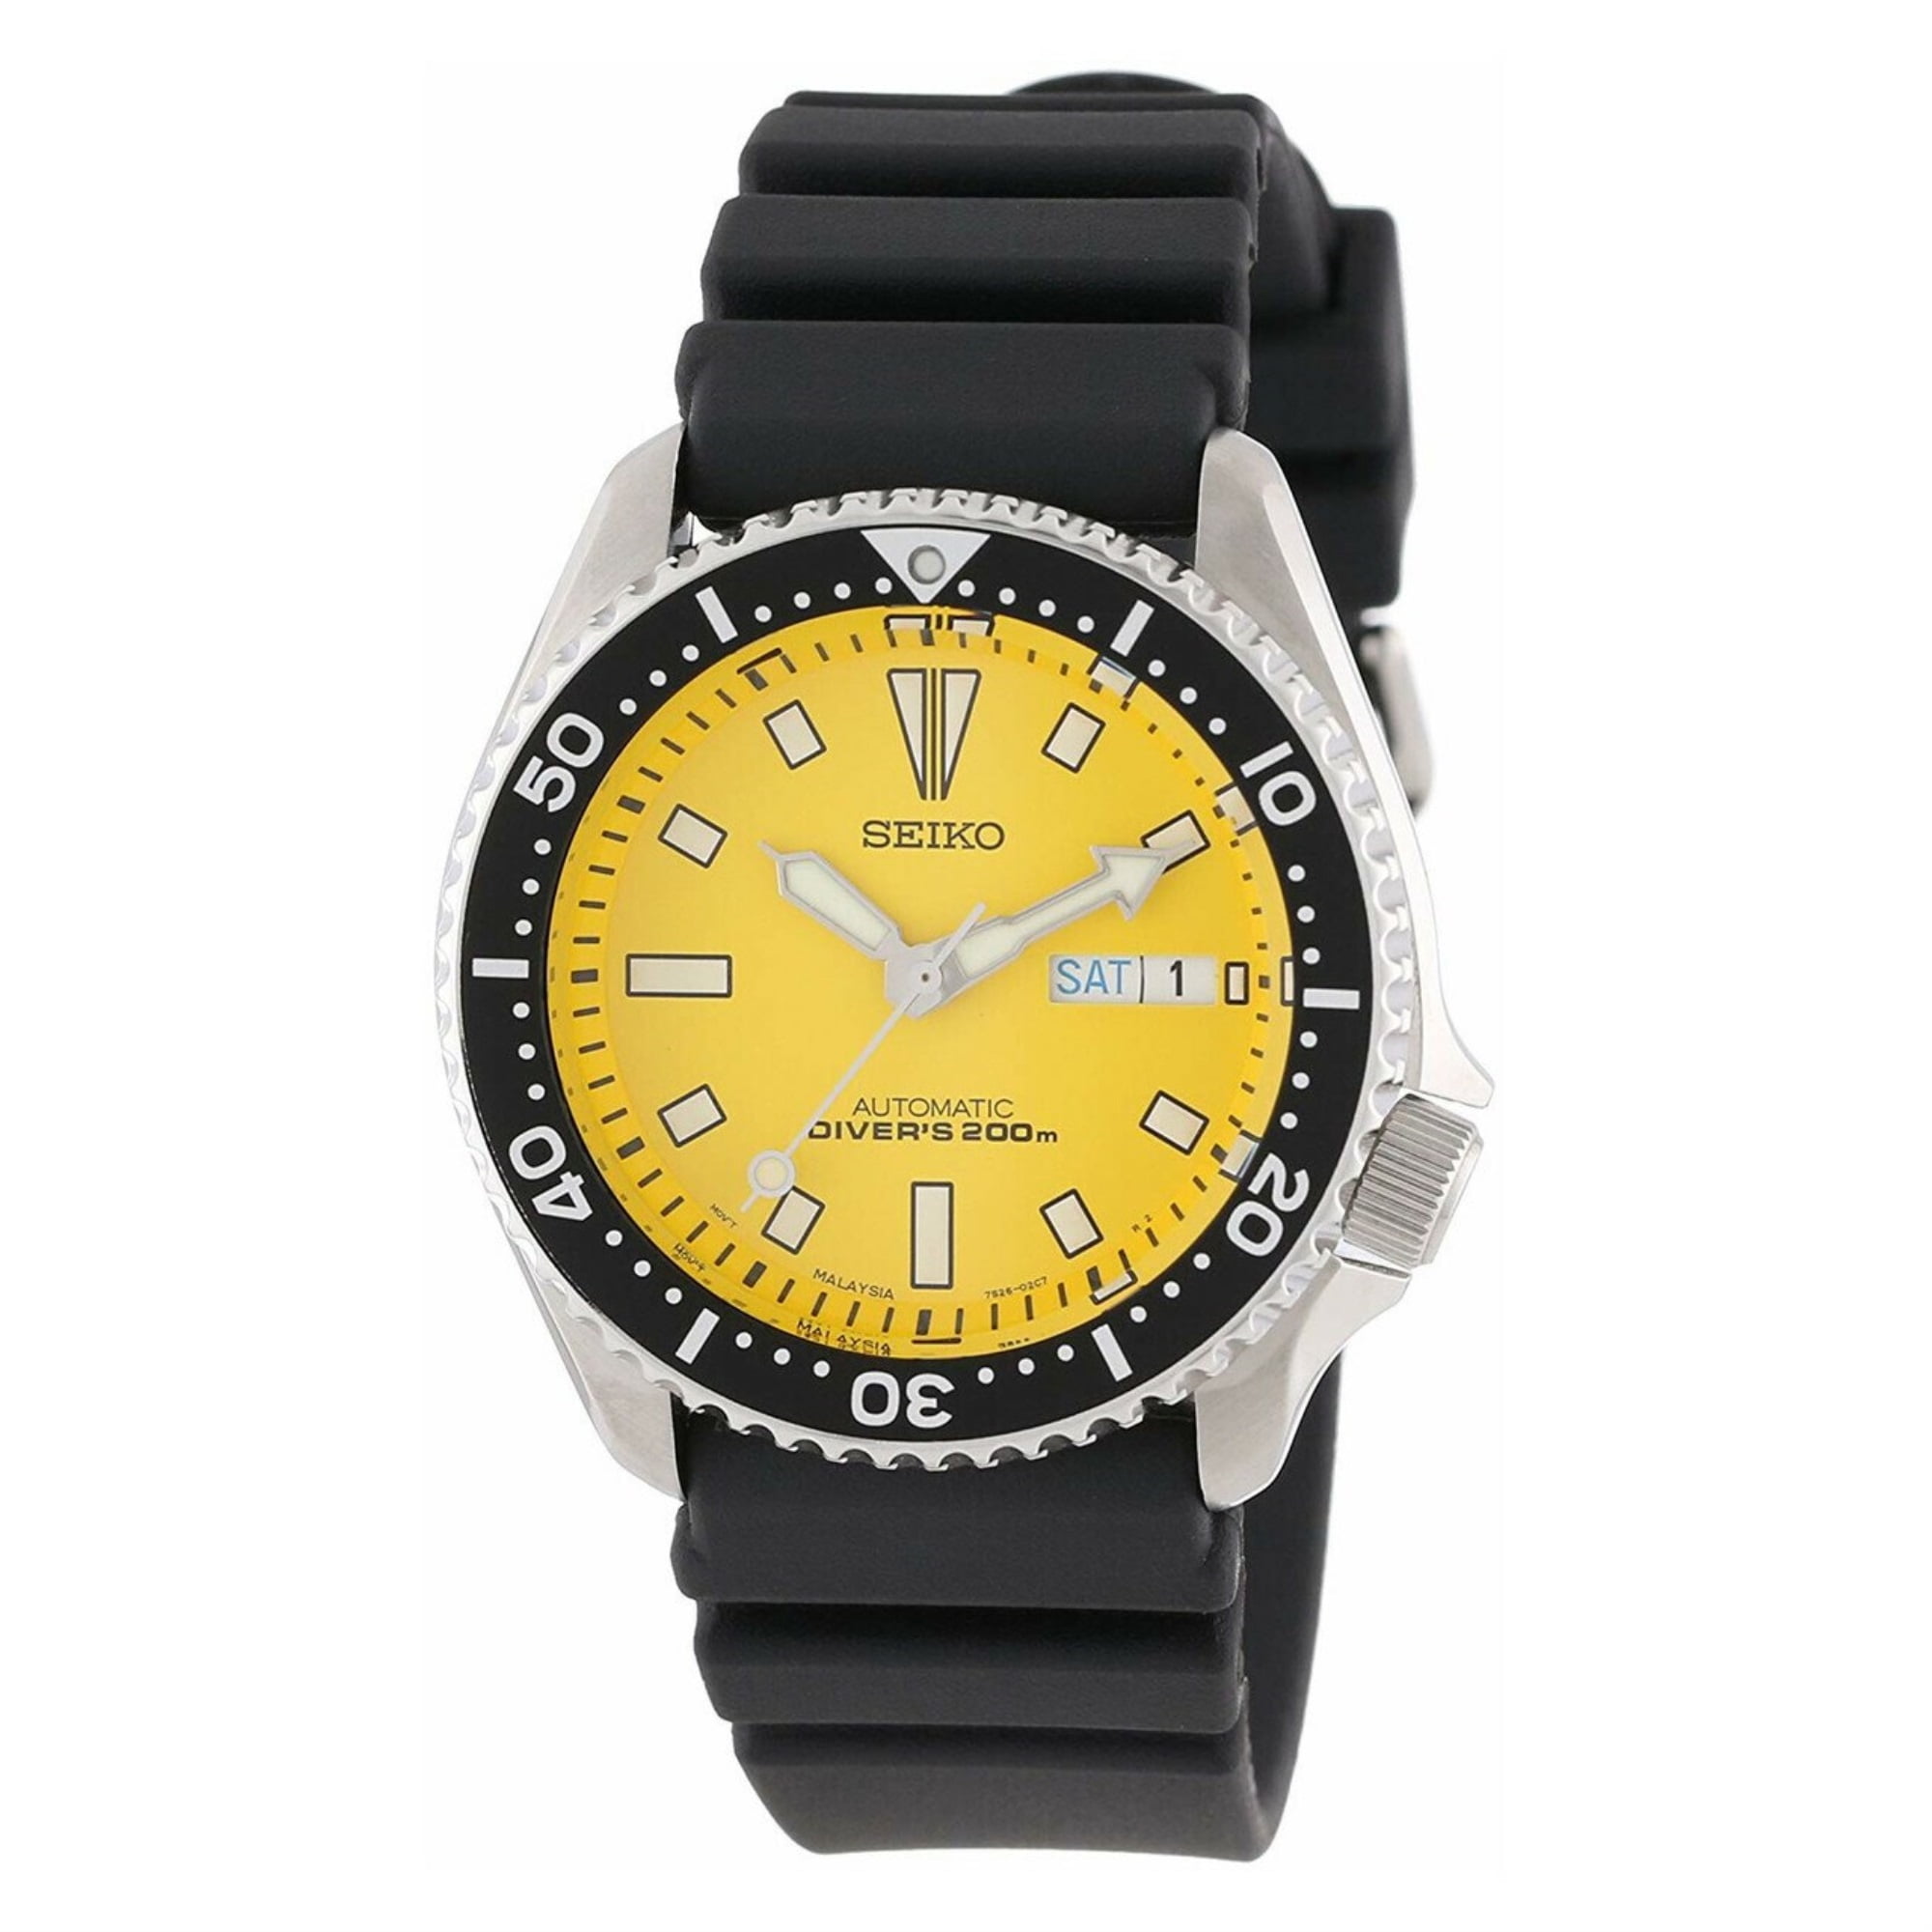 Seiko Men's Automatic Diver Analog Watch - Black Rubber Strap - Yellow Dial  - SKXA35 